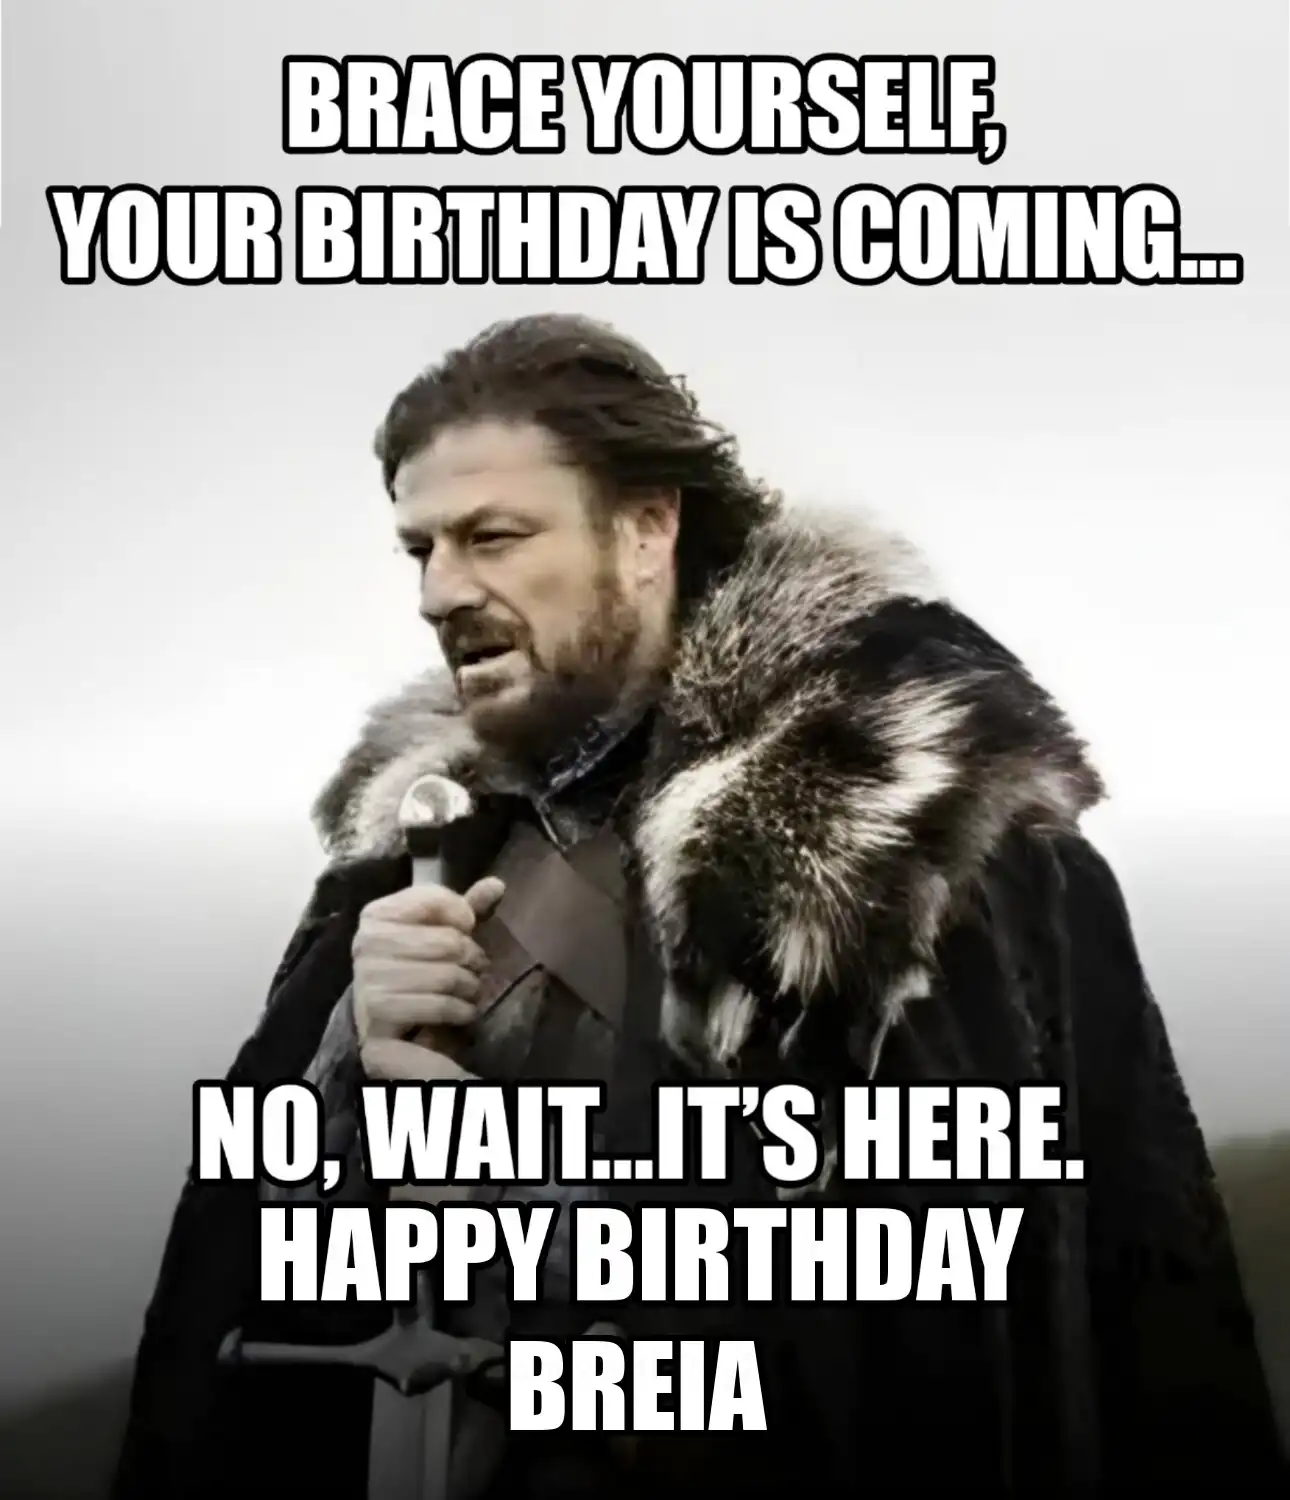 Happy Birthday Breia Brace Yourself Your Birthday Is Coming Meme